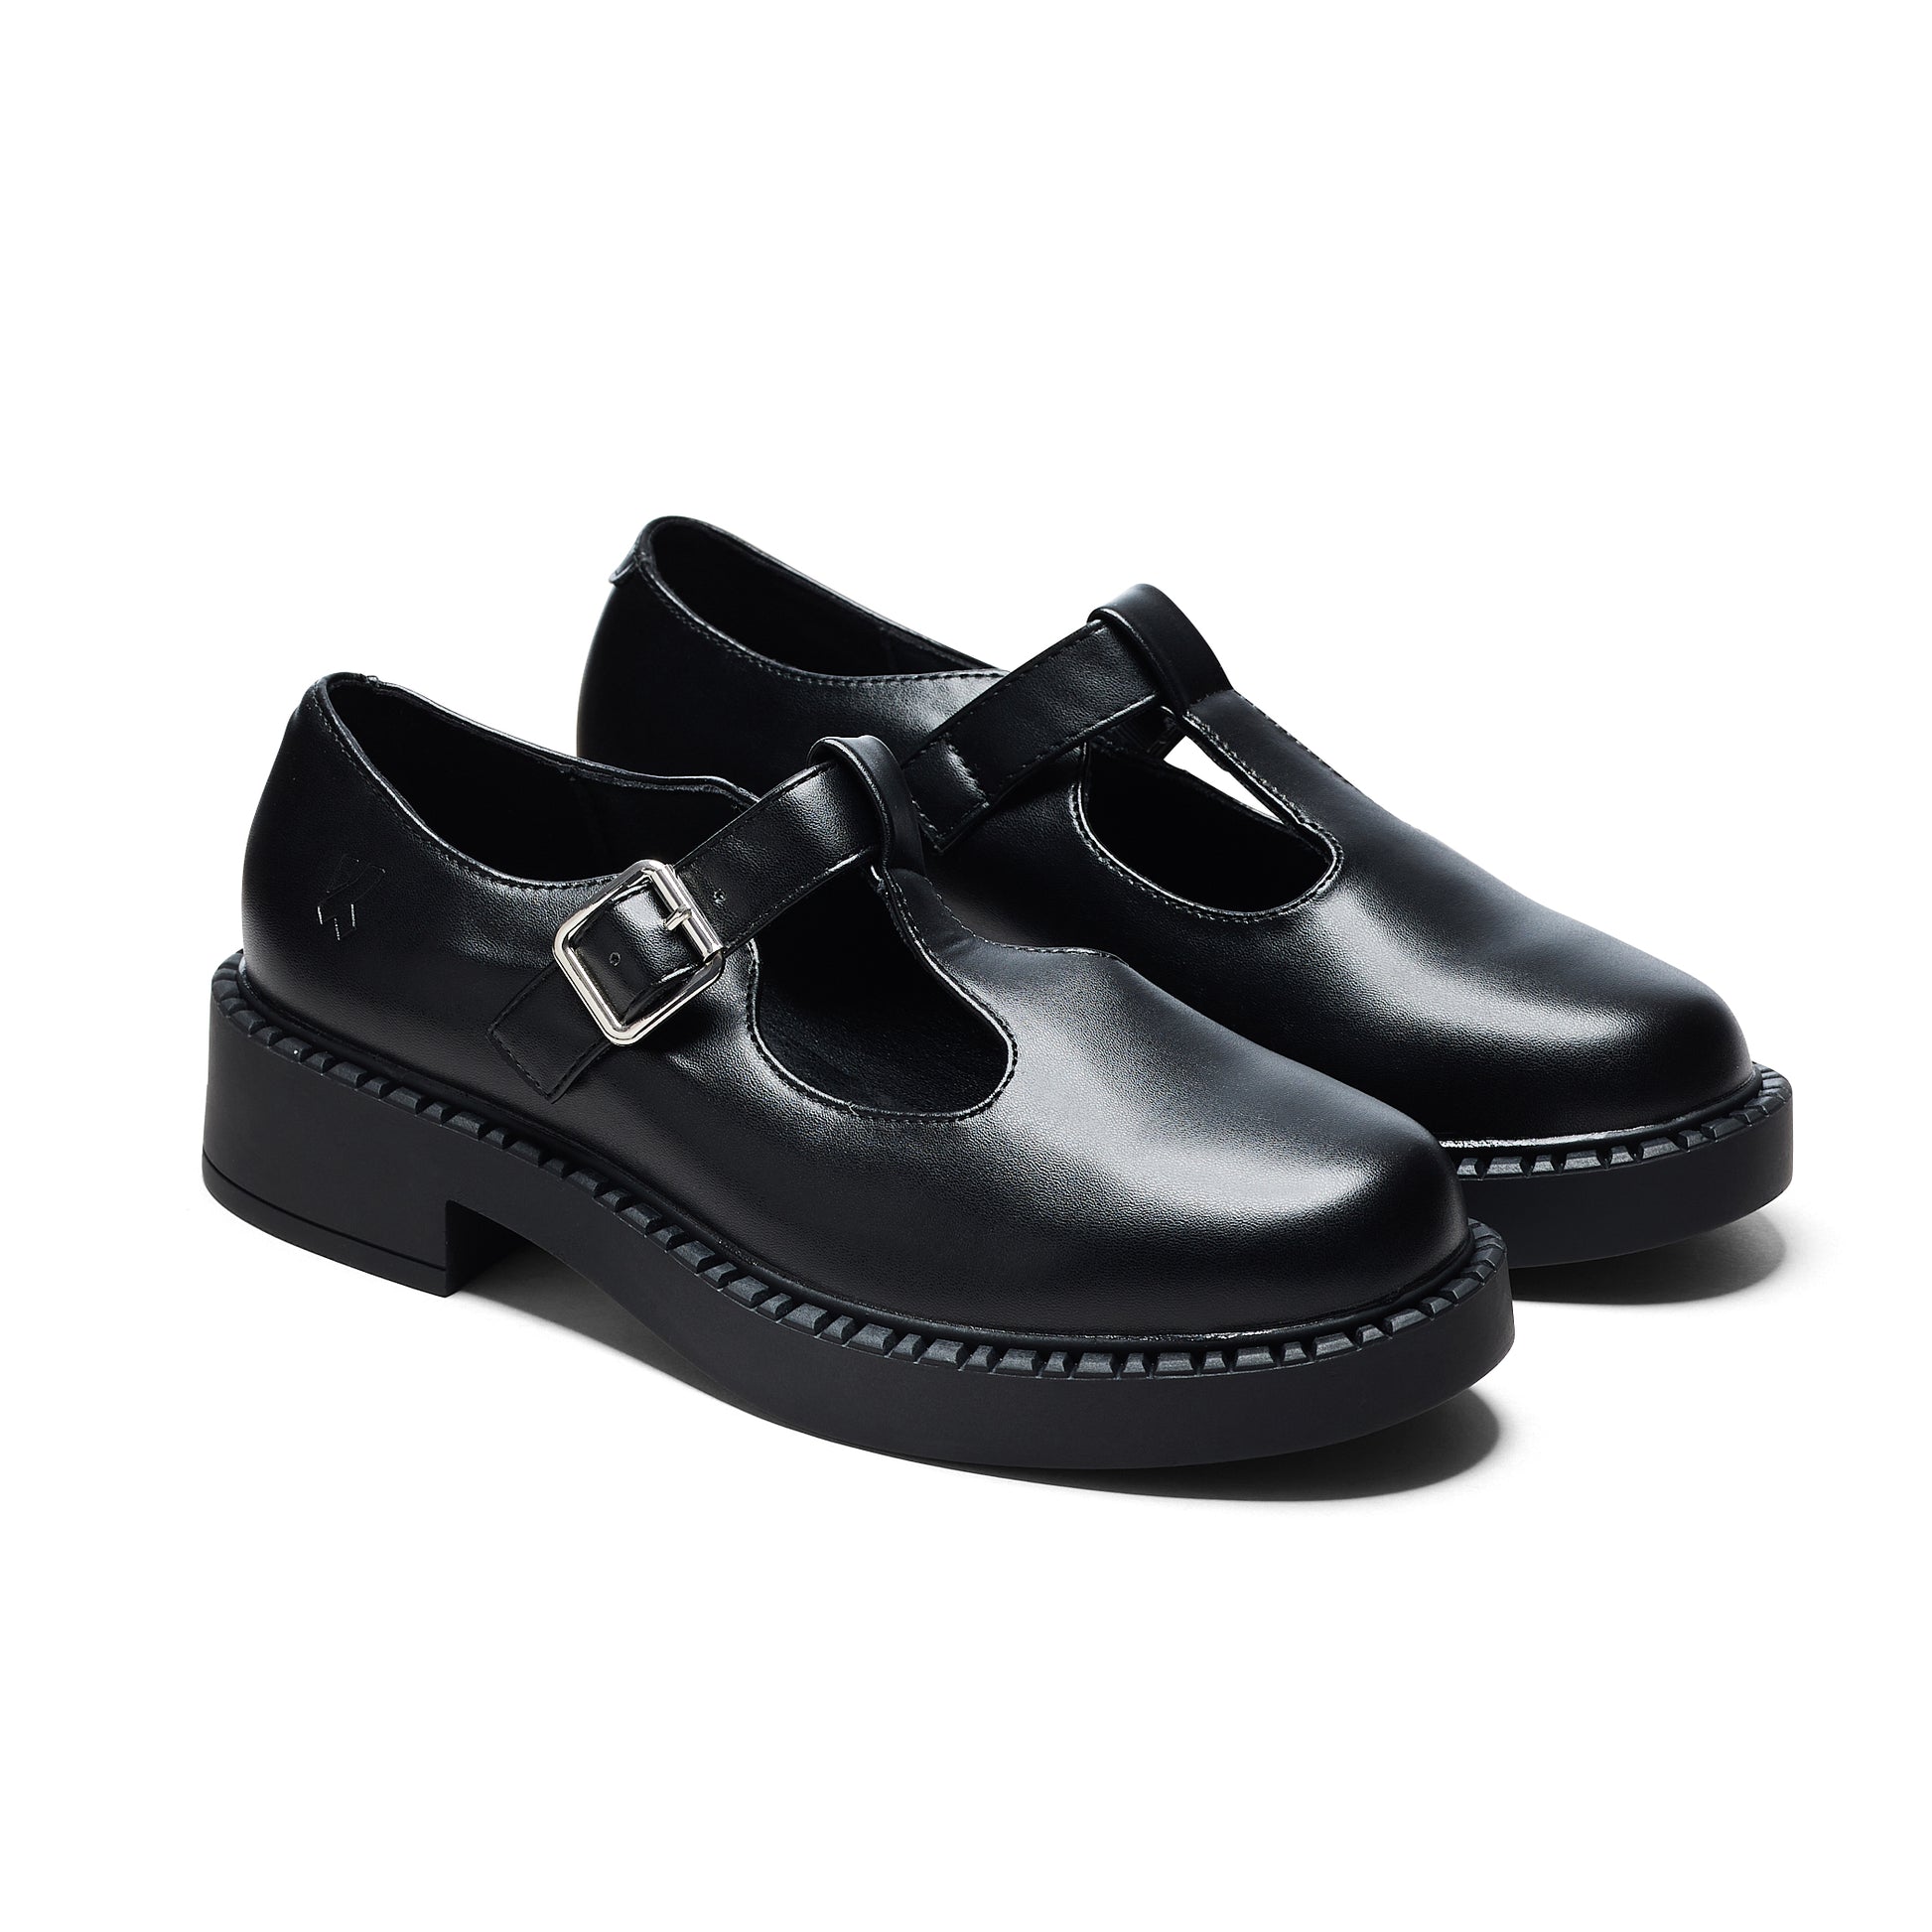 Simido Tale Mary Janes - Mary Janes - KOI Footwear - Black - Three-Quarter View